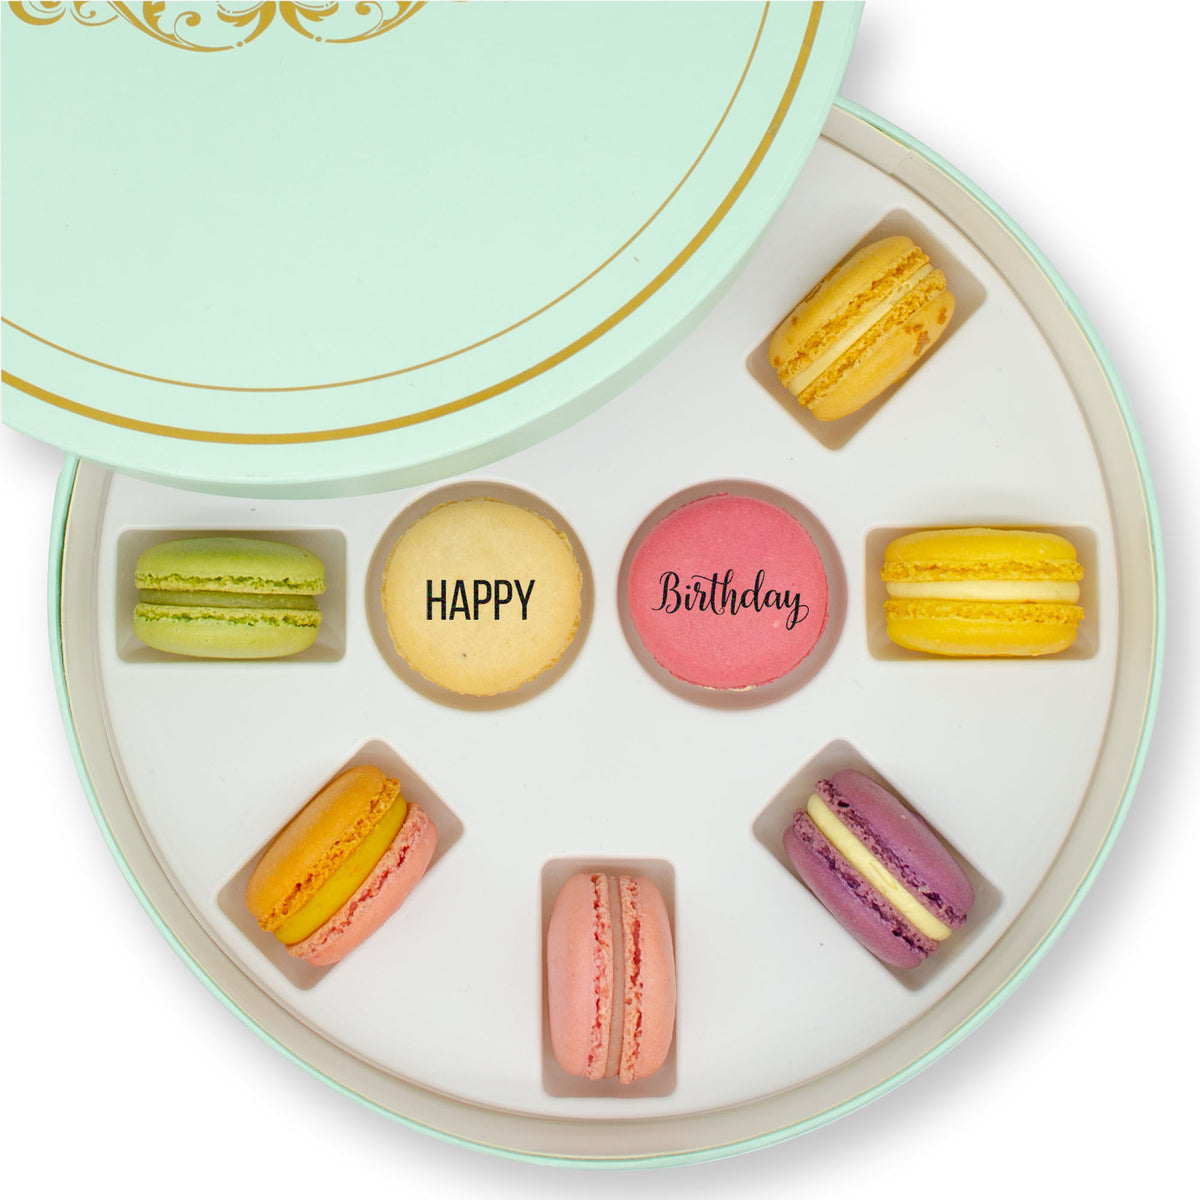 bedruckte Macaron Geschenkbox  - Macarons mit Botschaft